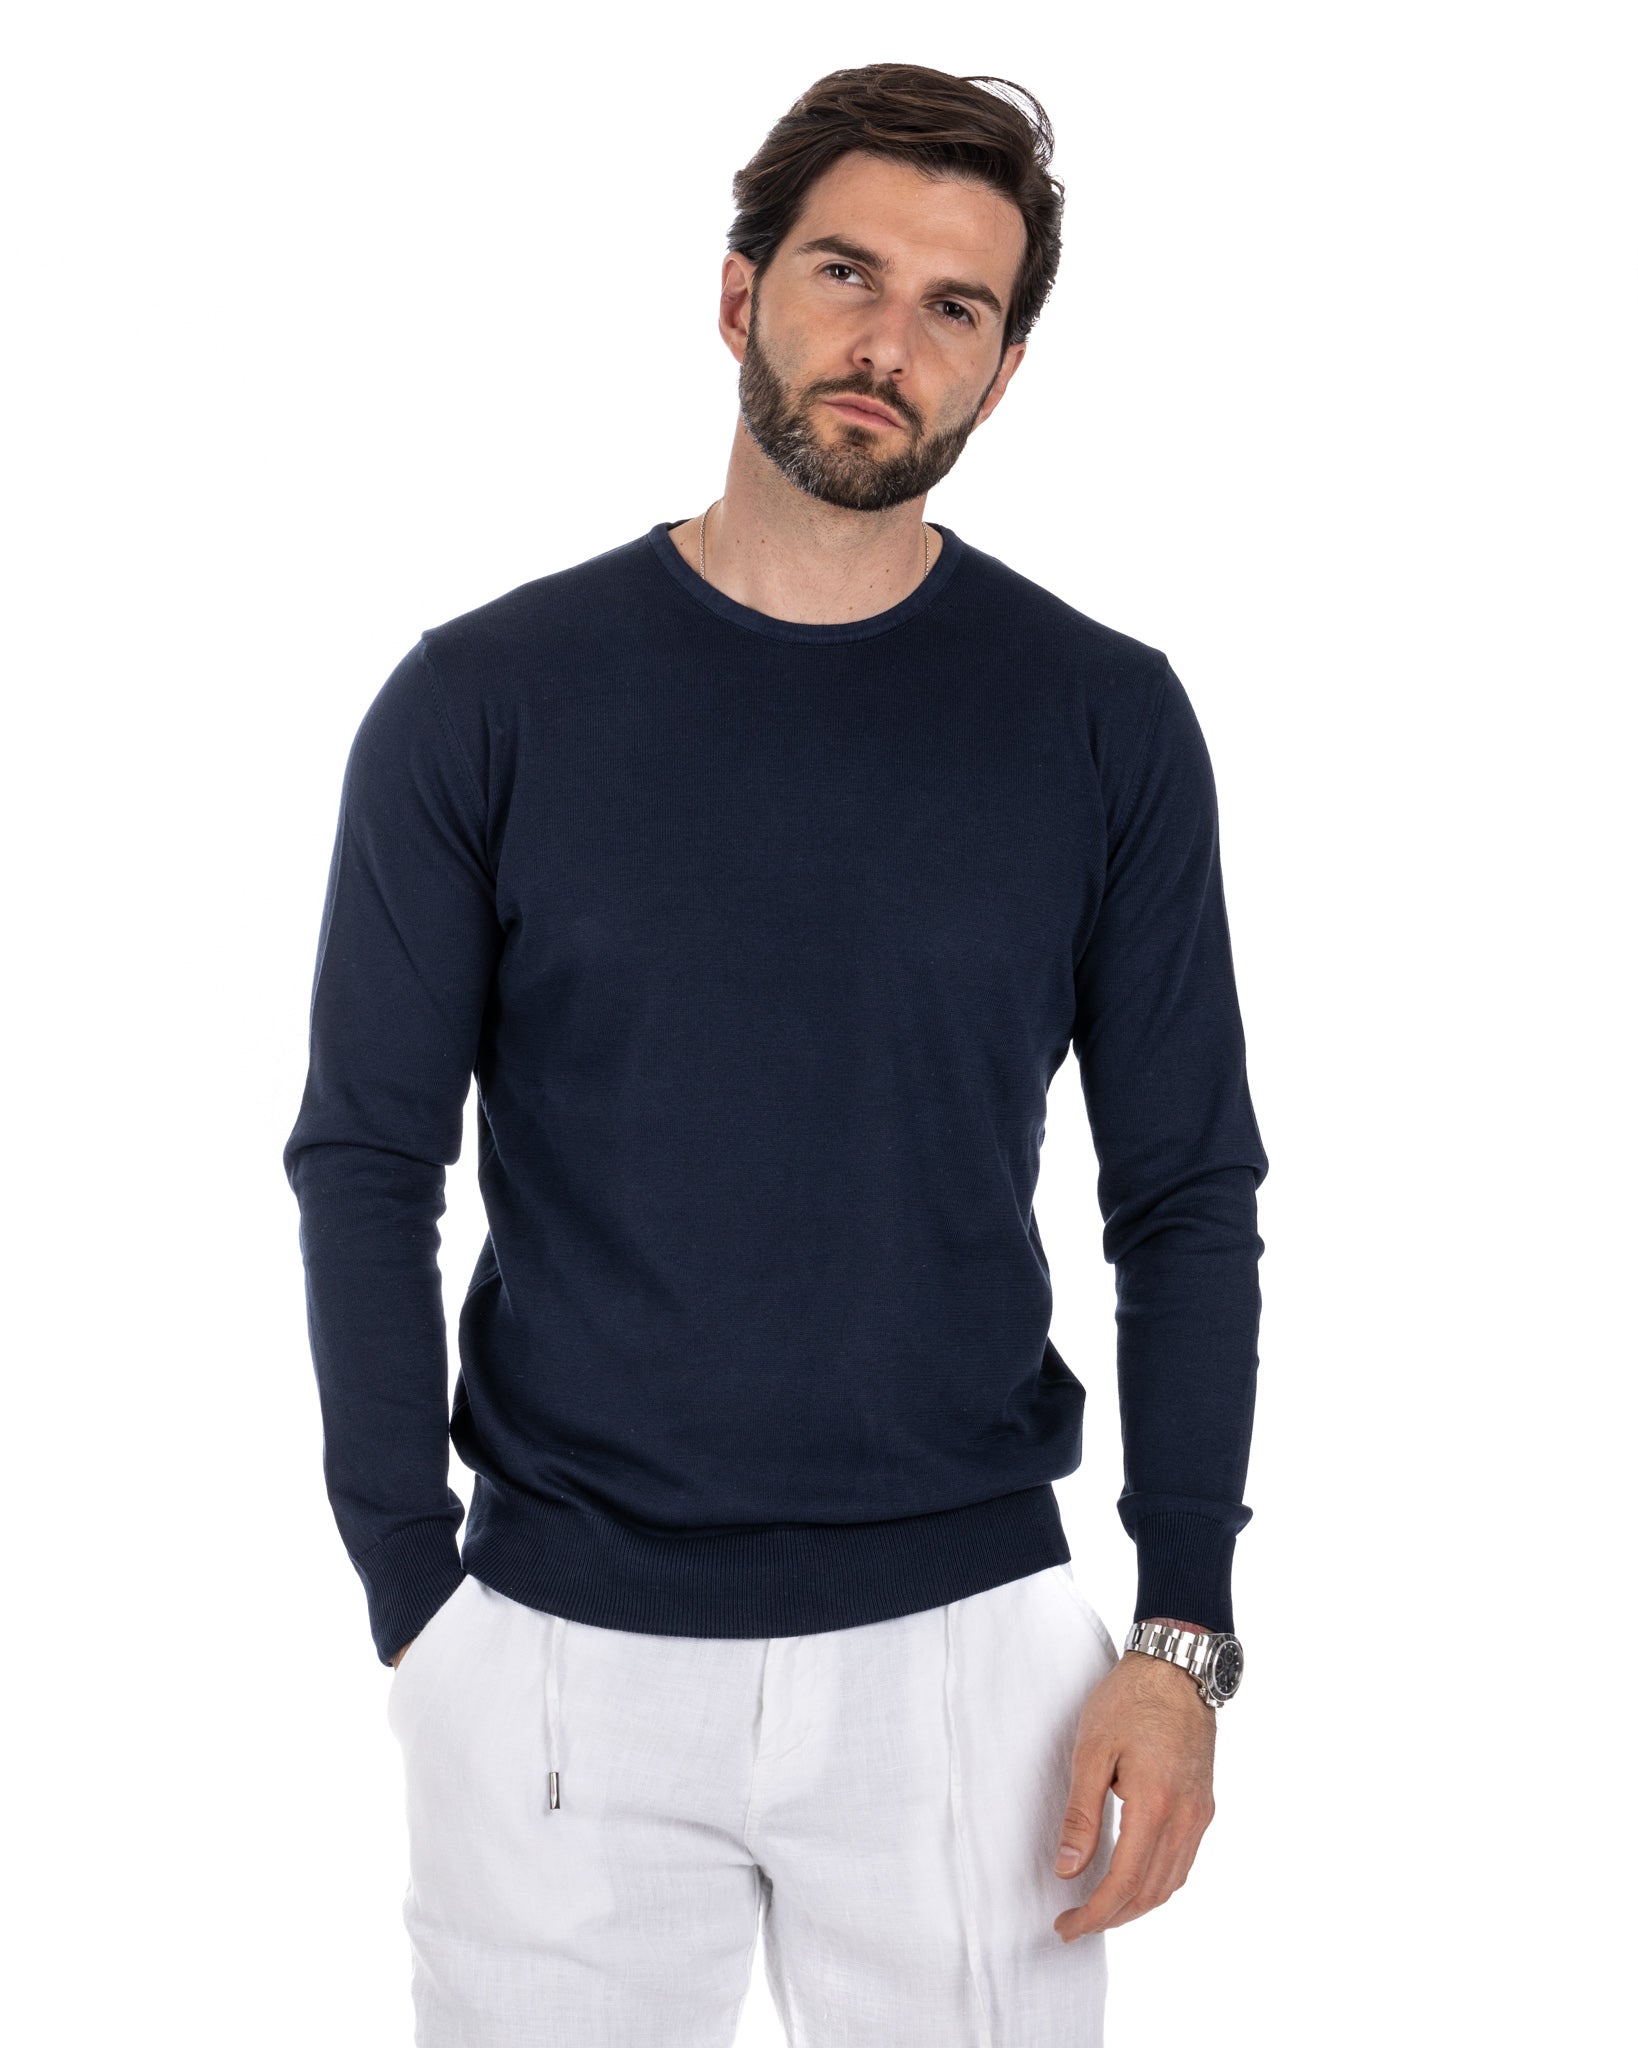 Daniil - blue cotton sweater